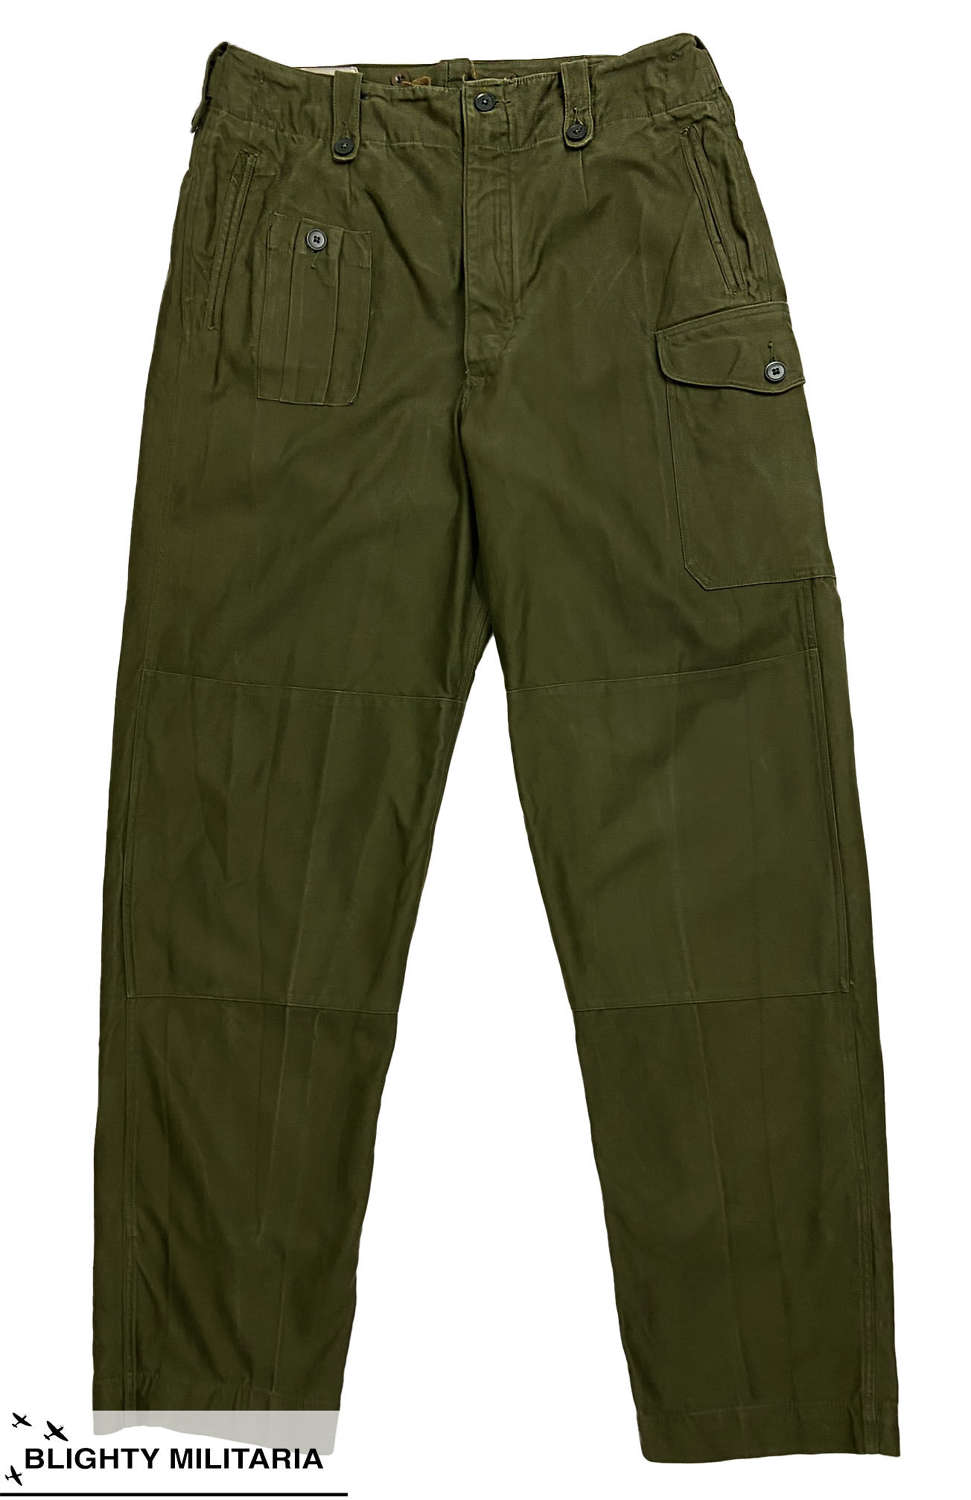 Original 1960s British Army 1960 Pattern Combat Trousers - Size 8